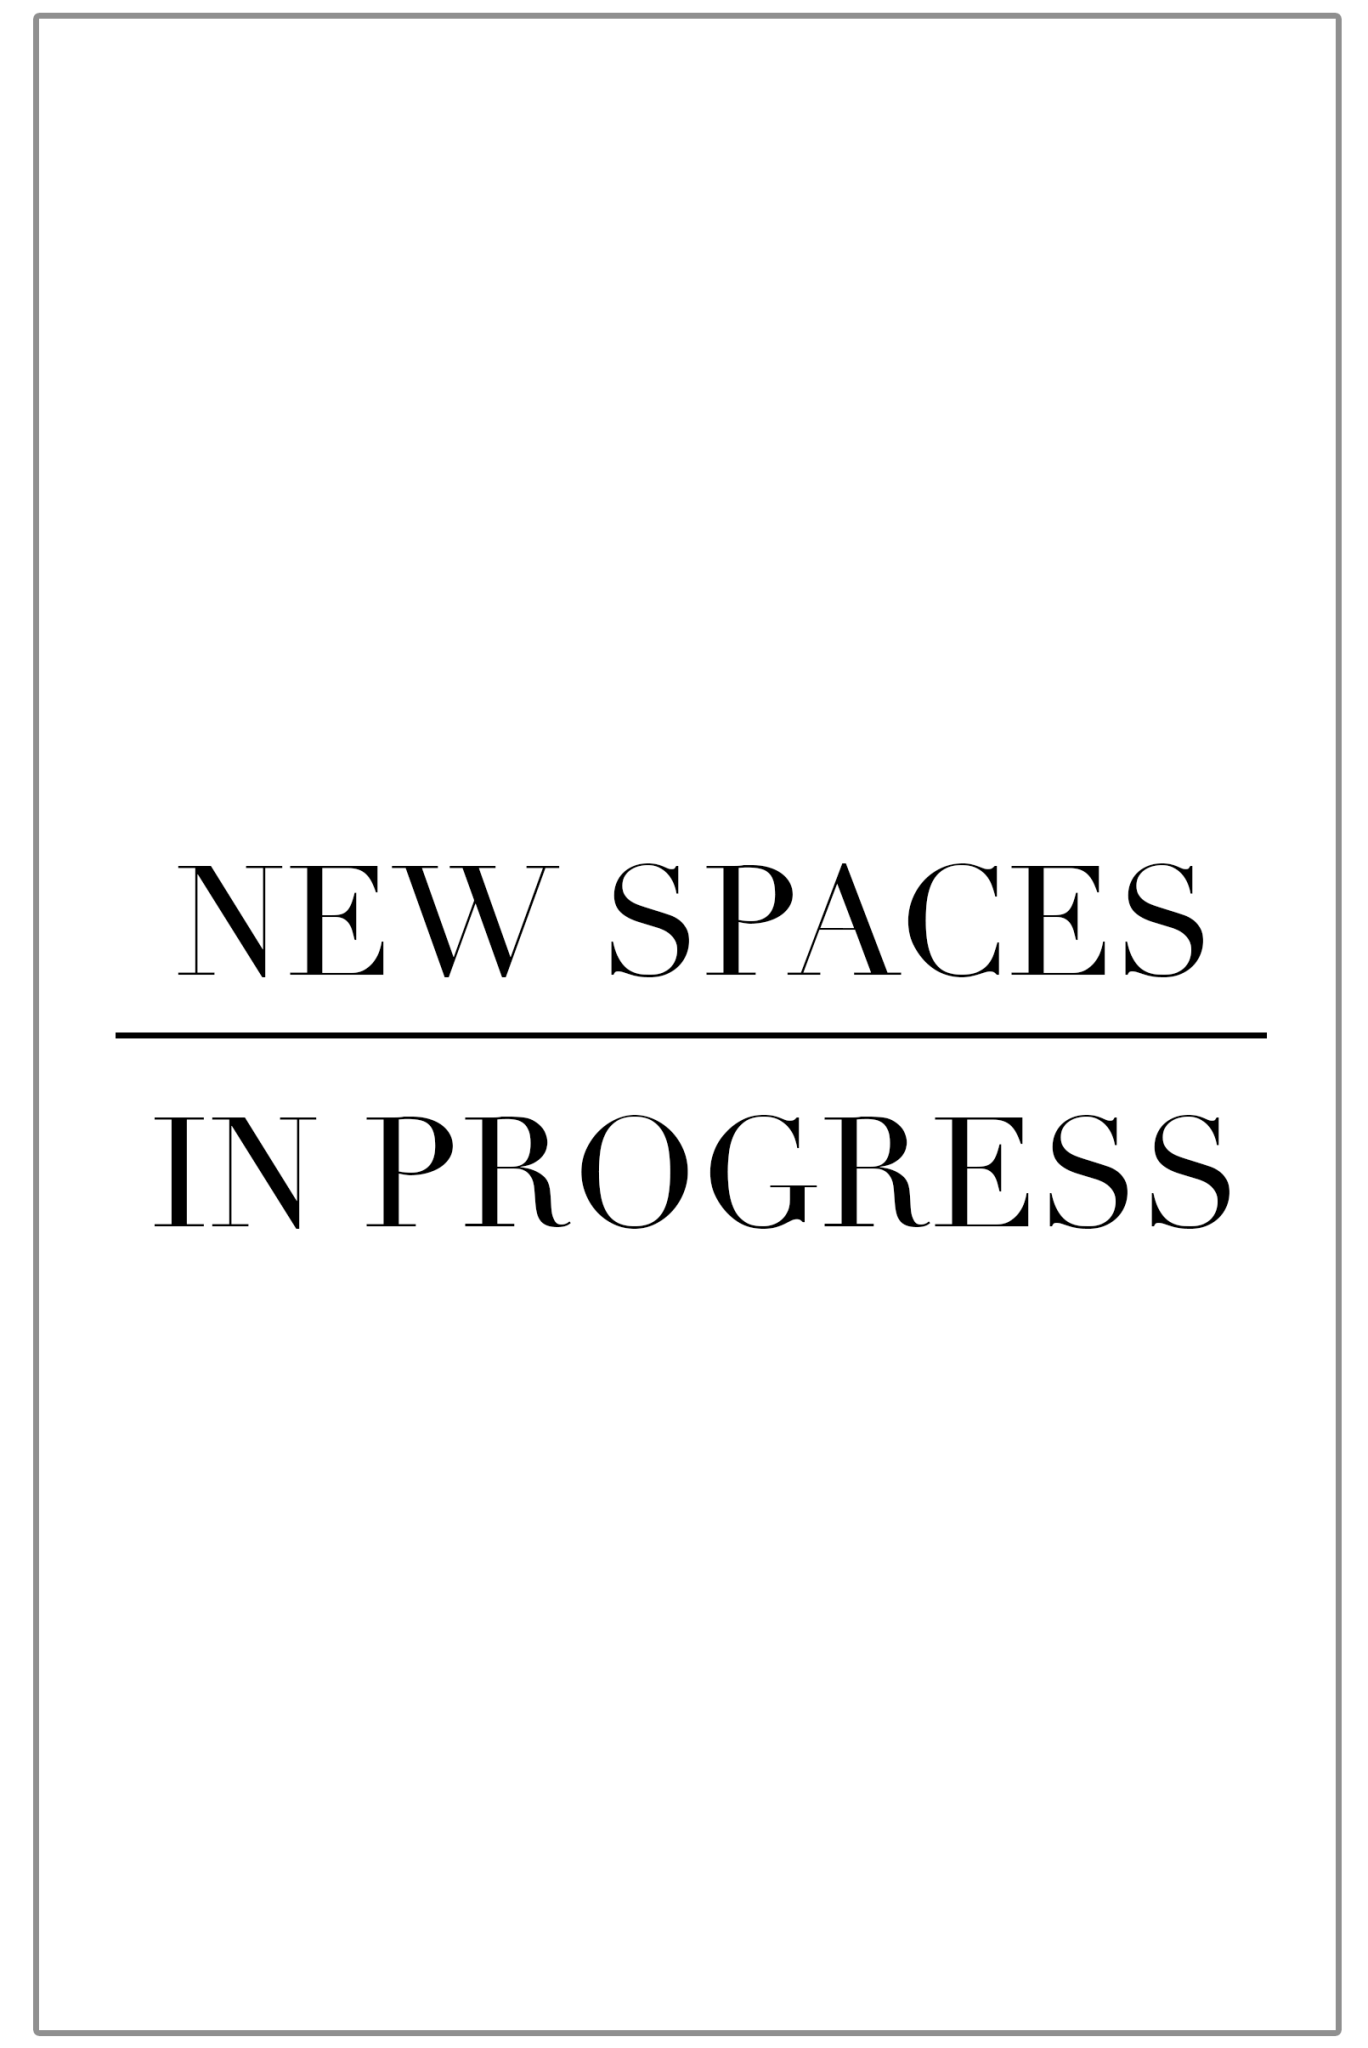 News Spaces In Progress Pizzale Design Inc